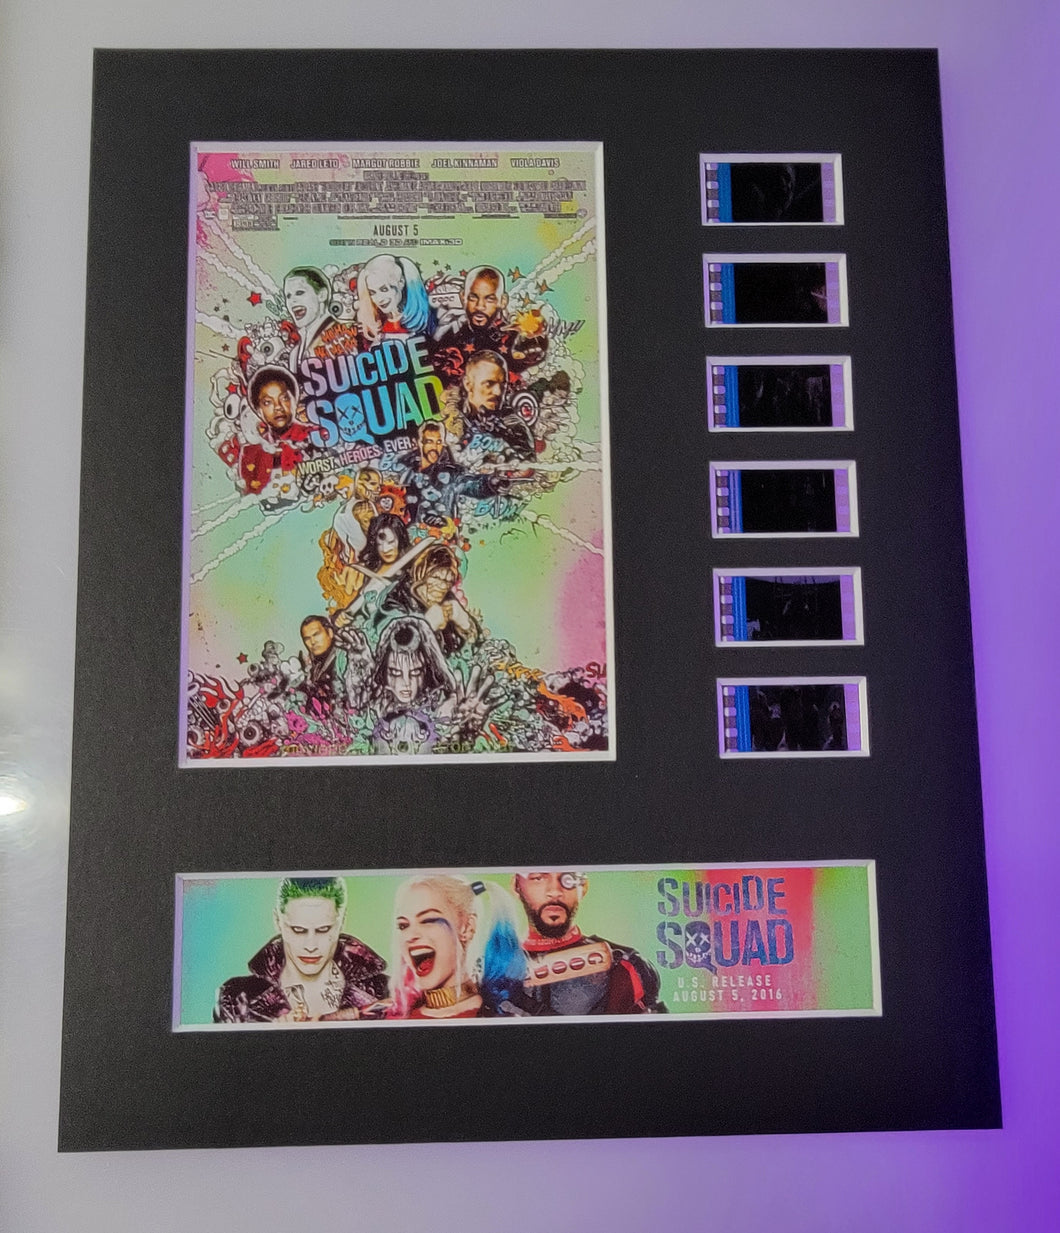 Suicide Squad 2016 Harley Quinn Joker 35mm Movie Film Cell Display 8x10 Presentation